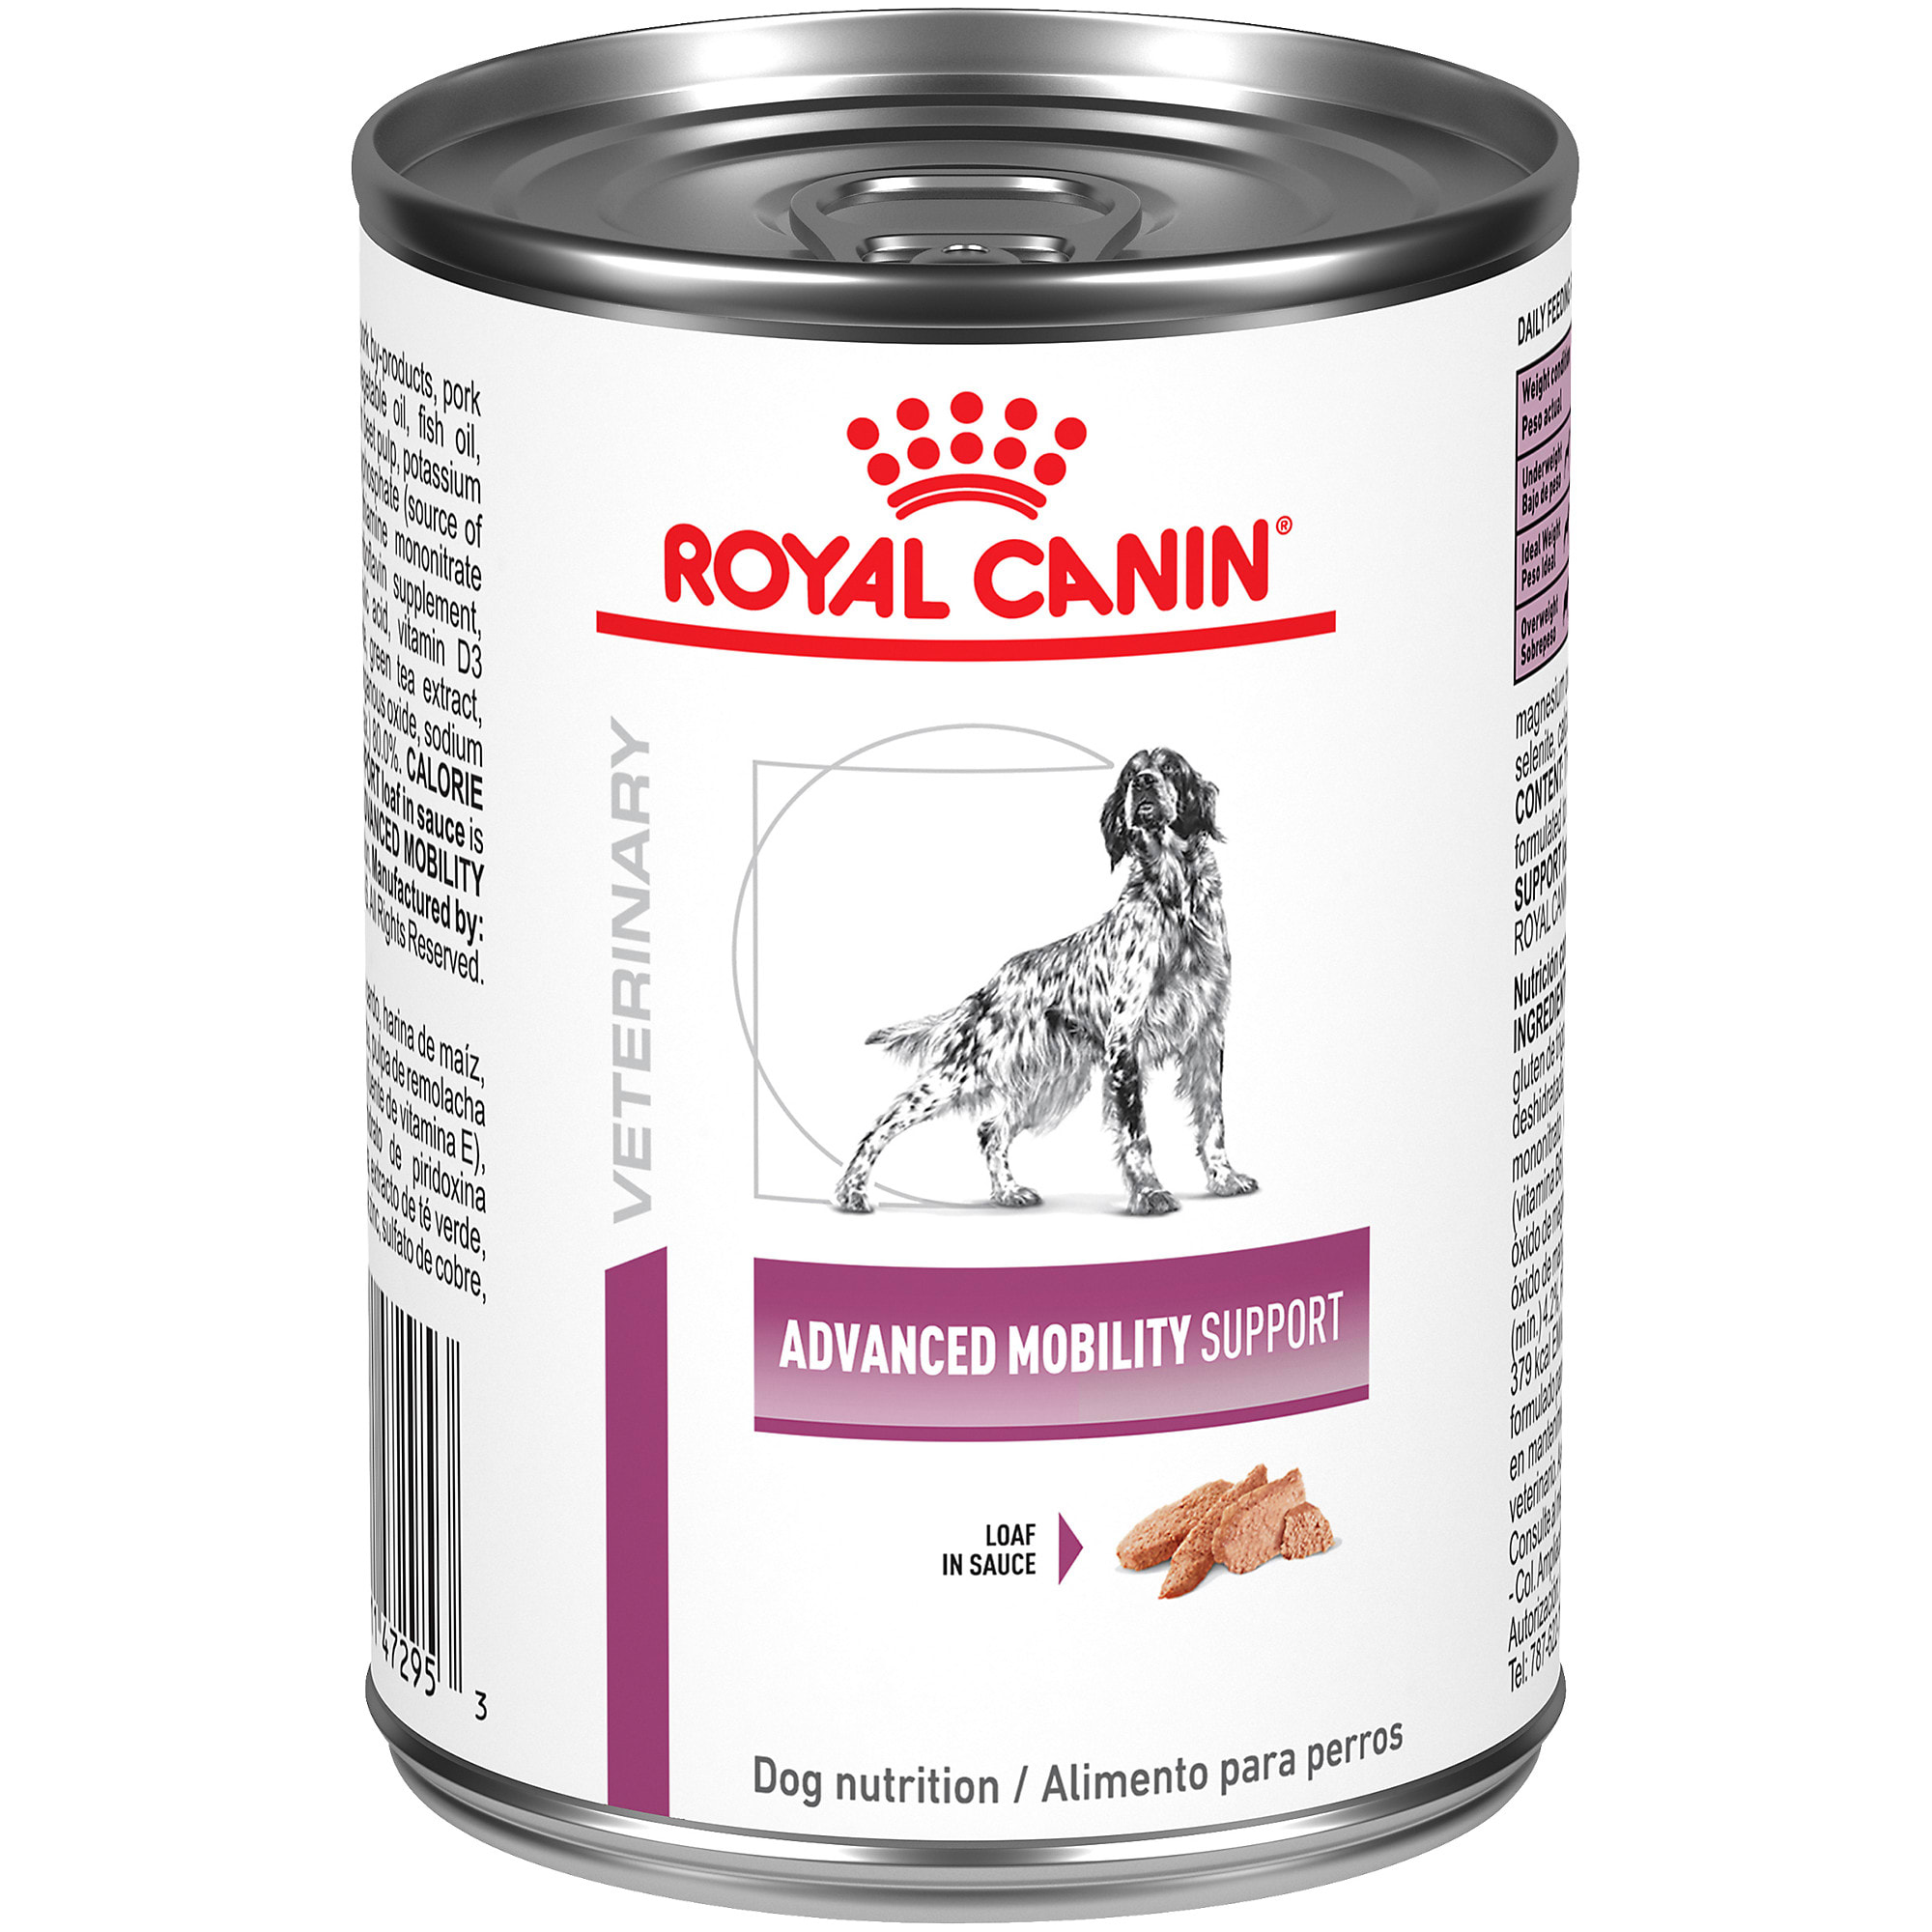 Vegen lood rijm Royal Canin Canine Advanced Mobility Support Loaf in Sauce Wet Dog Food,  13.5 oz., Case of 24 | Petco